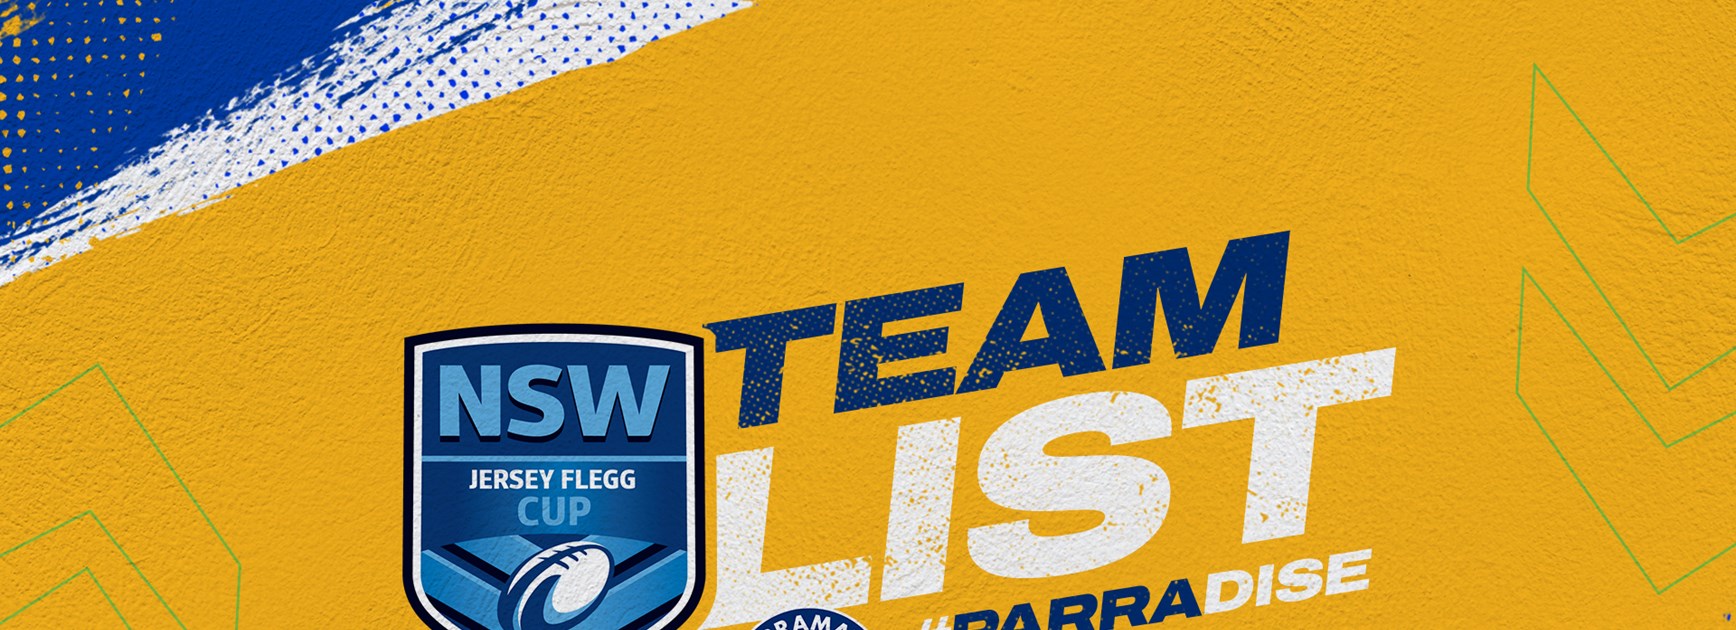 Jersey Flegg Cup Team List - Eels v Bulldogs, Round 23